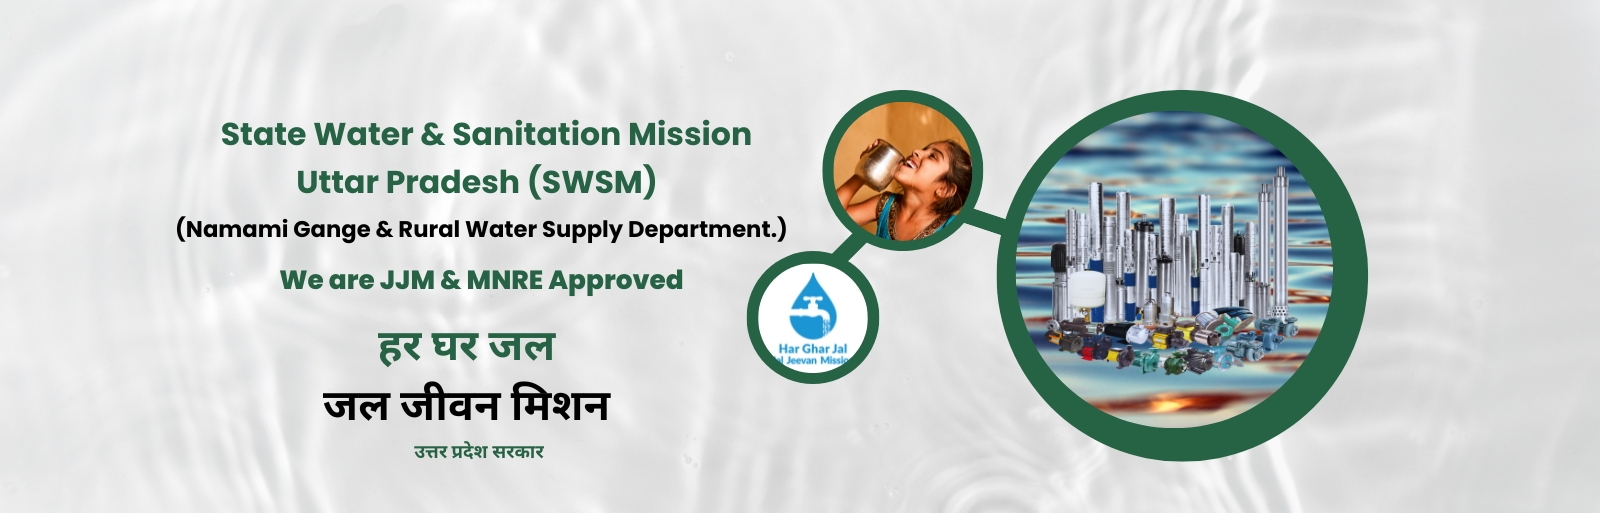 State Water & Sanitation Mission Uttar Pradesh (SWSM)